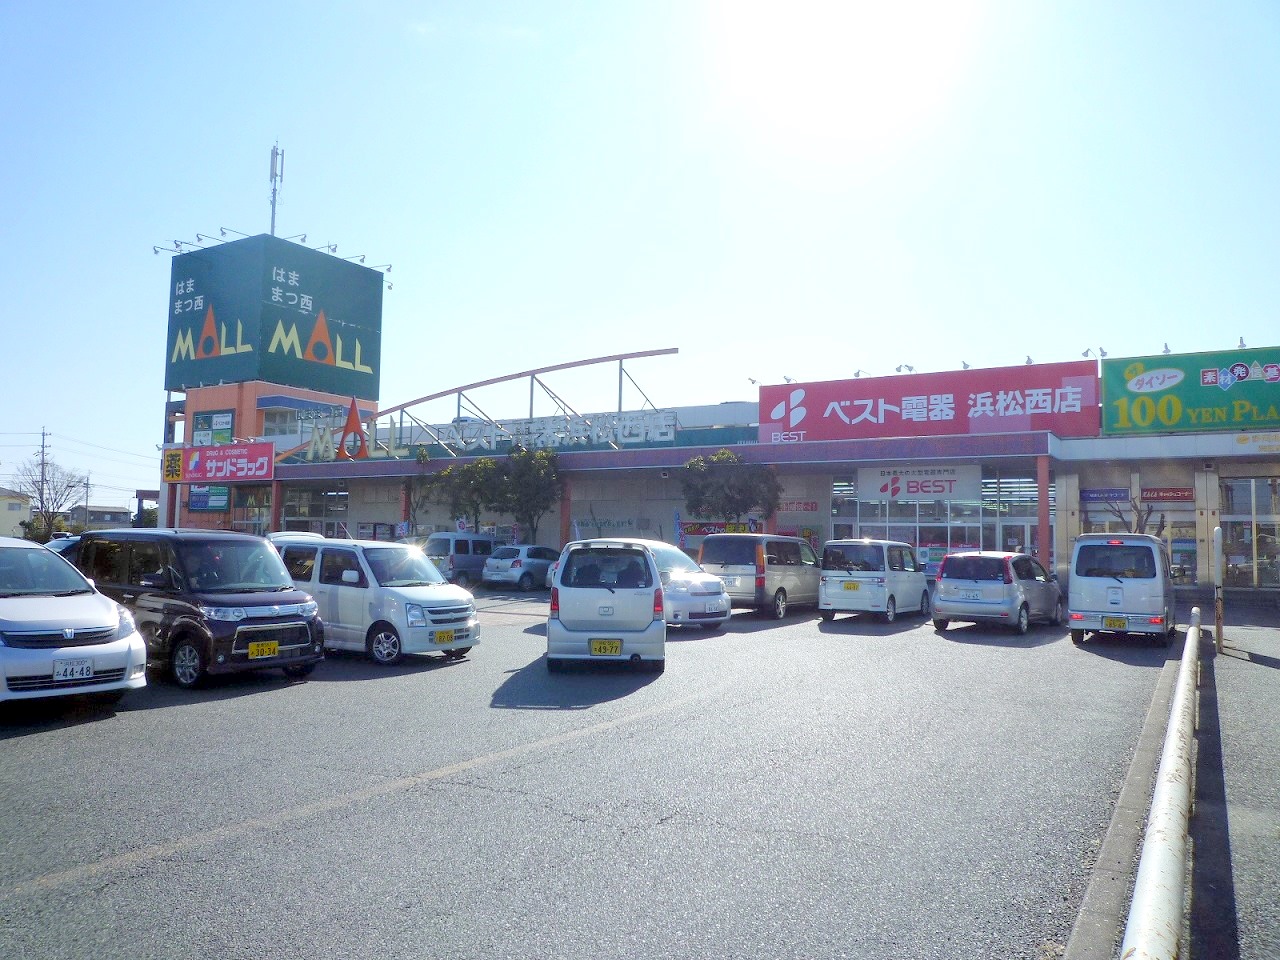 Shopping centre. 427m until Hamamatsunishi MALL (shopping center)